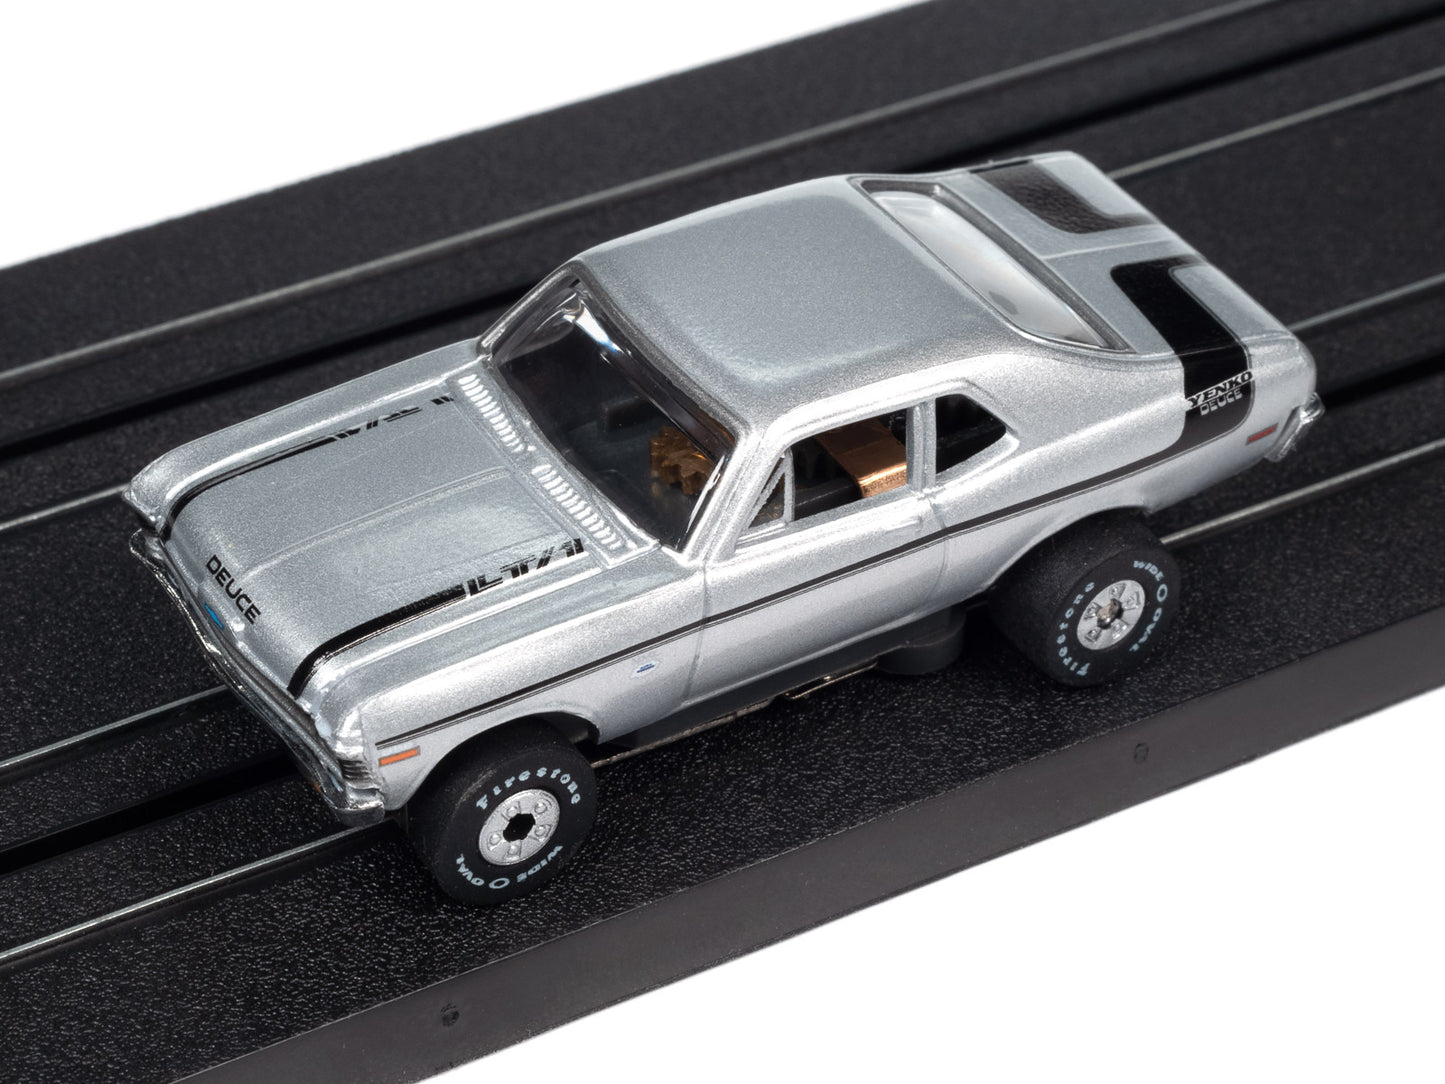 1970 Chevy Nova Yenko Deuce (Silver) H.O. Scale Slot Car, ThunderJet Chassis